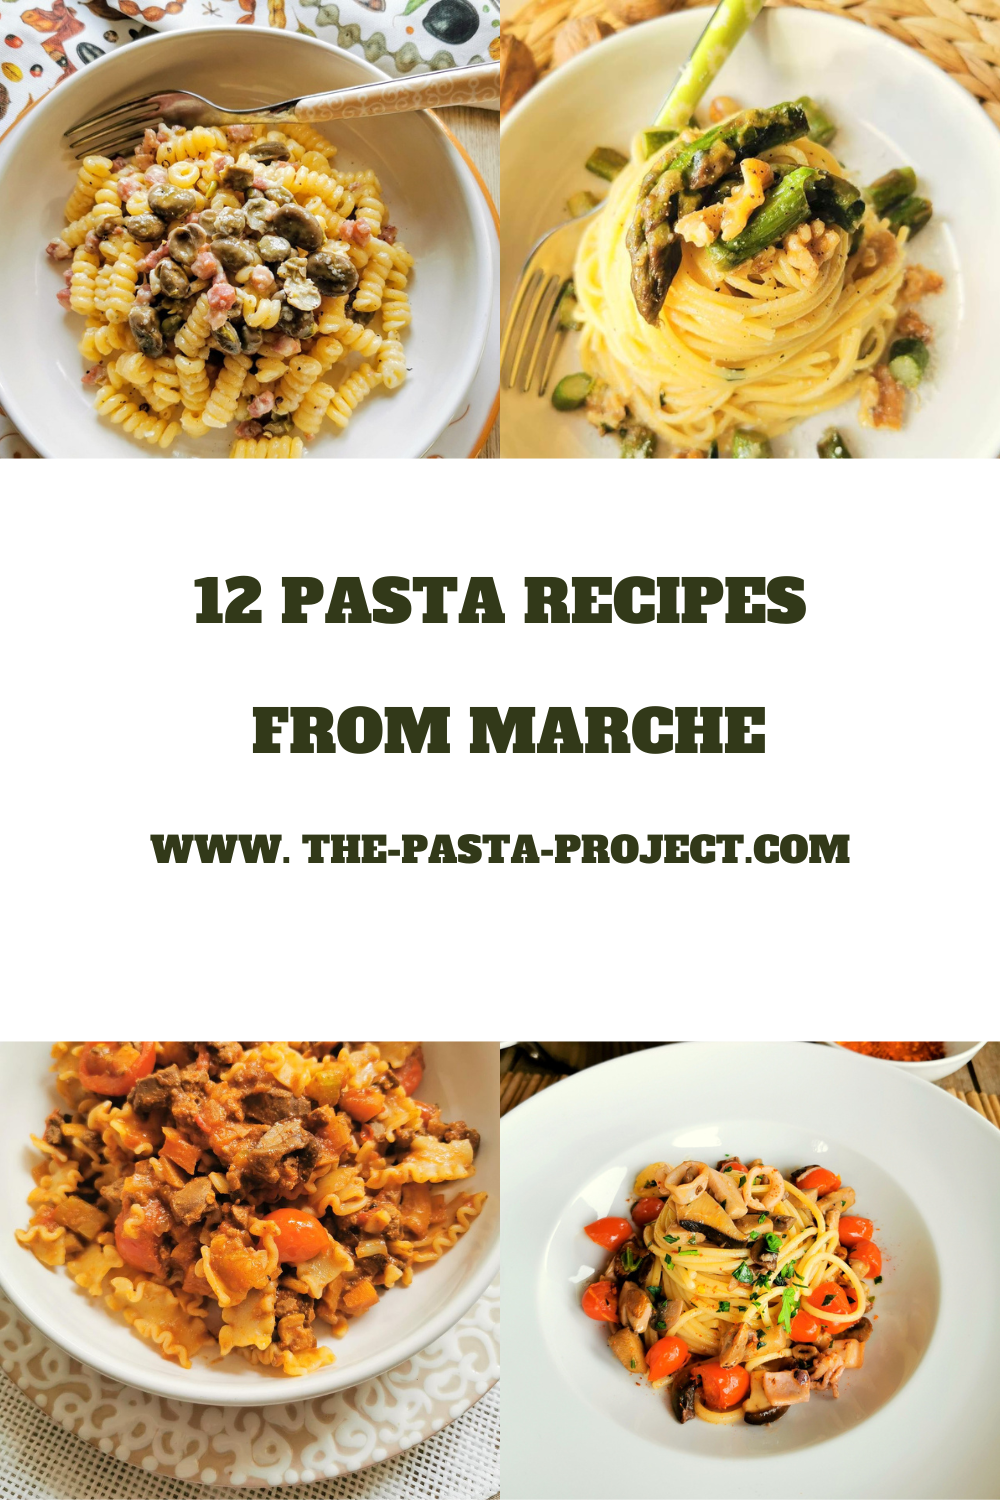 12 pasta recipes from Marche.